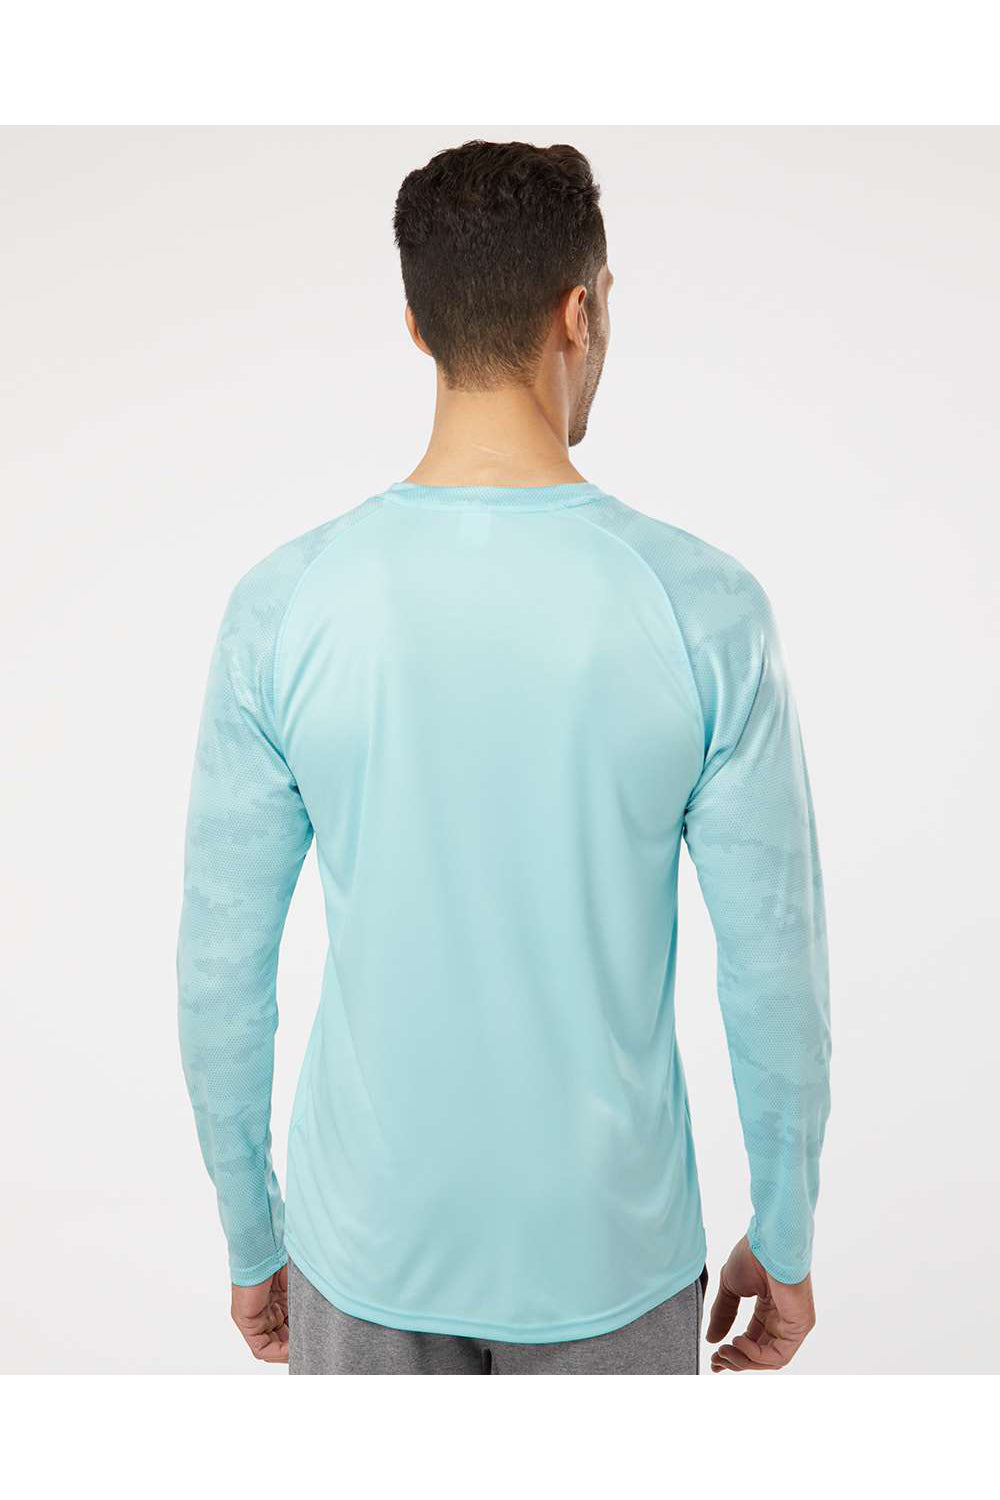 Paragon 216 Mens Cayman Performance Camo Colorblocked Long Sleeve Crewneck T-Shirt Aqua Blue Model Back